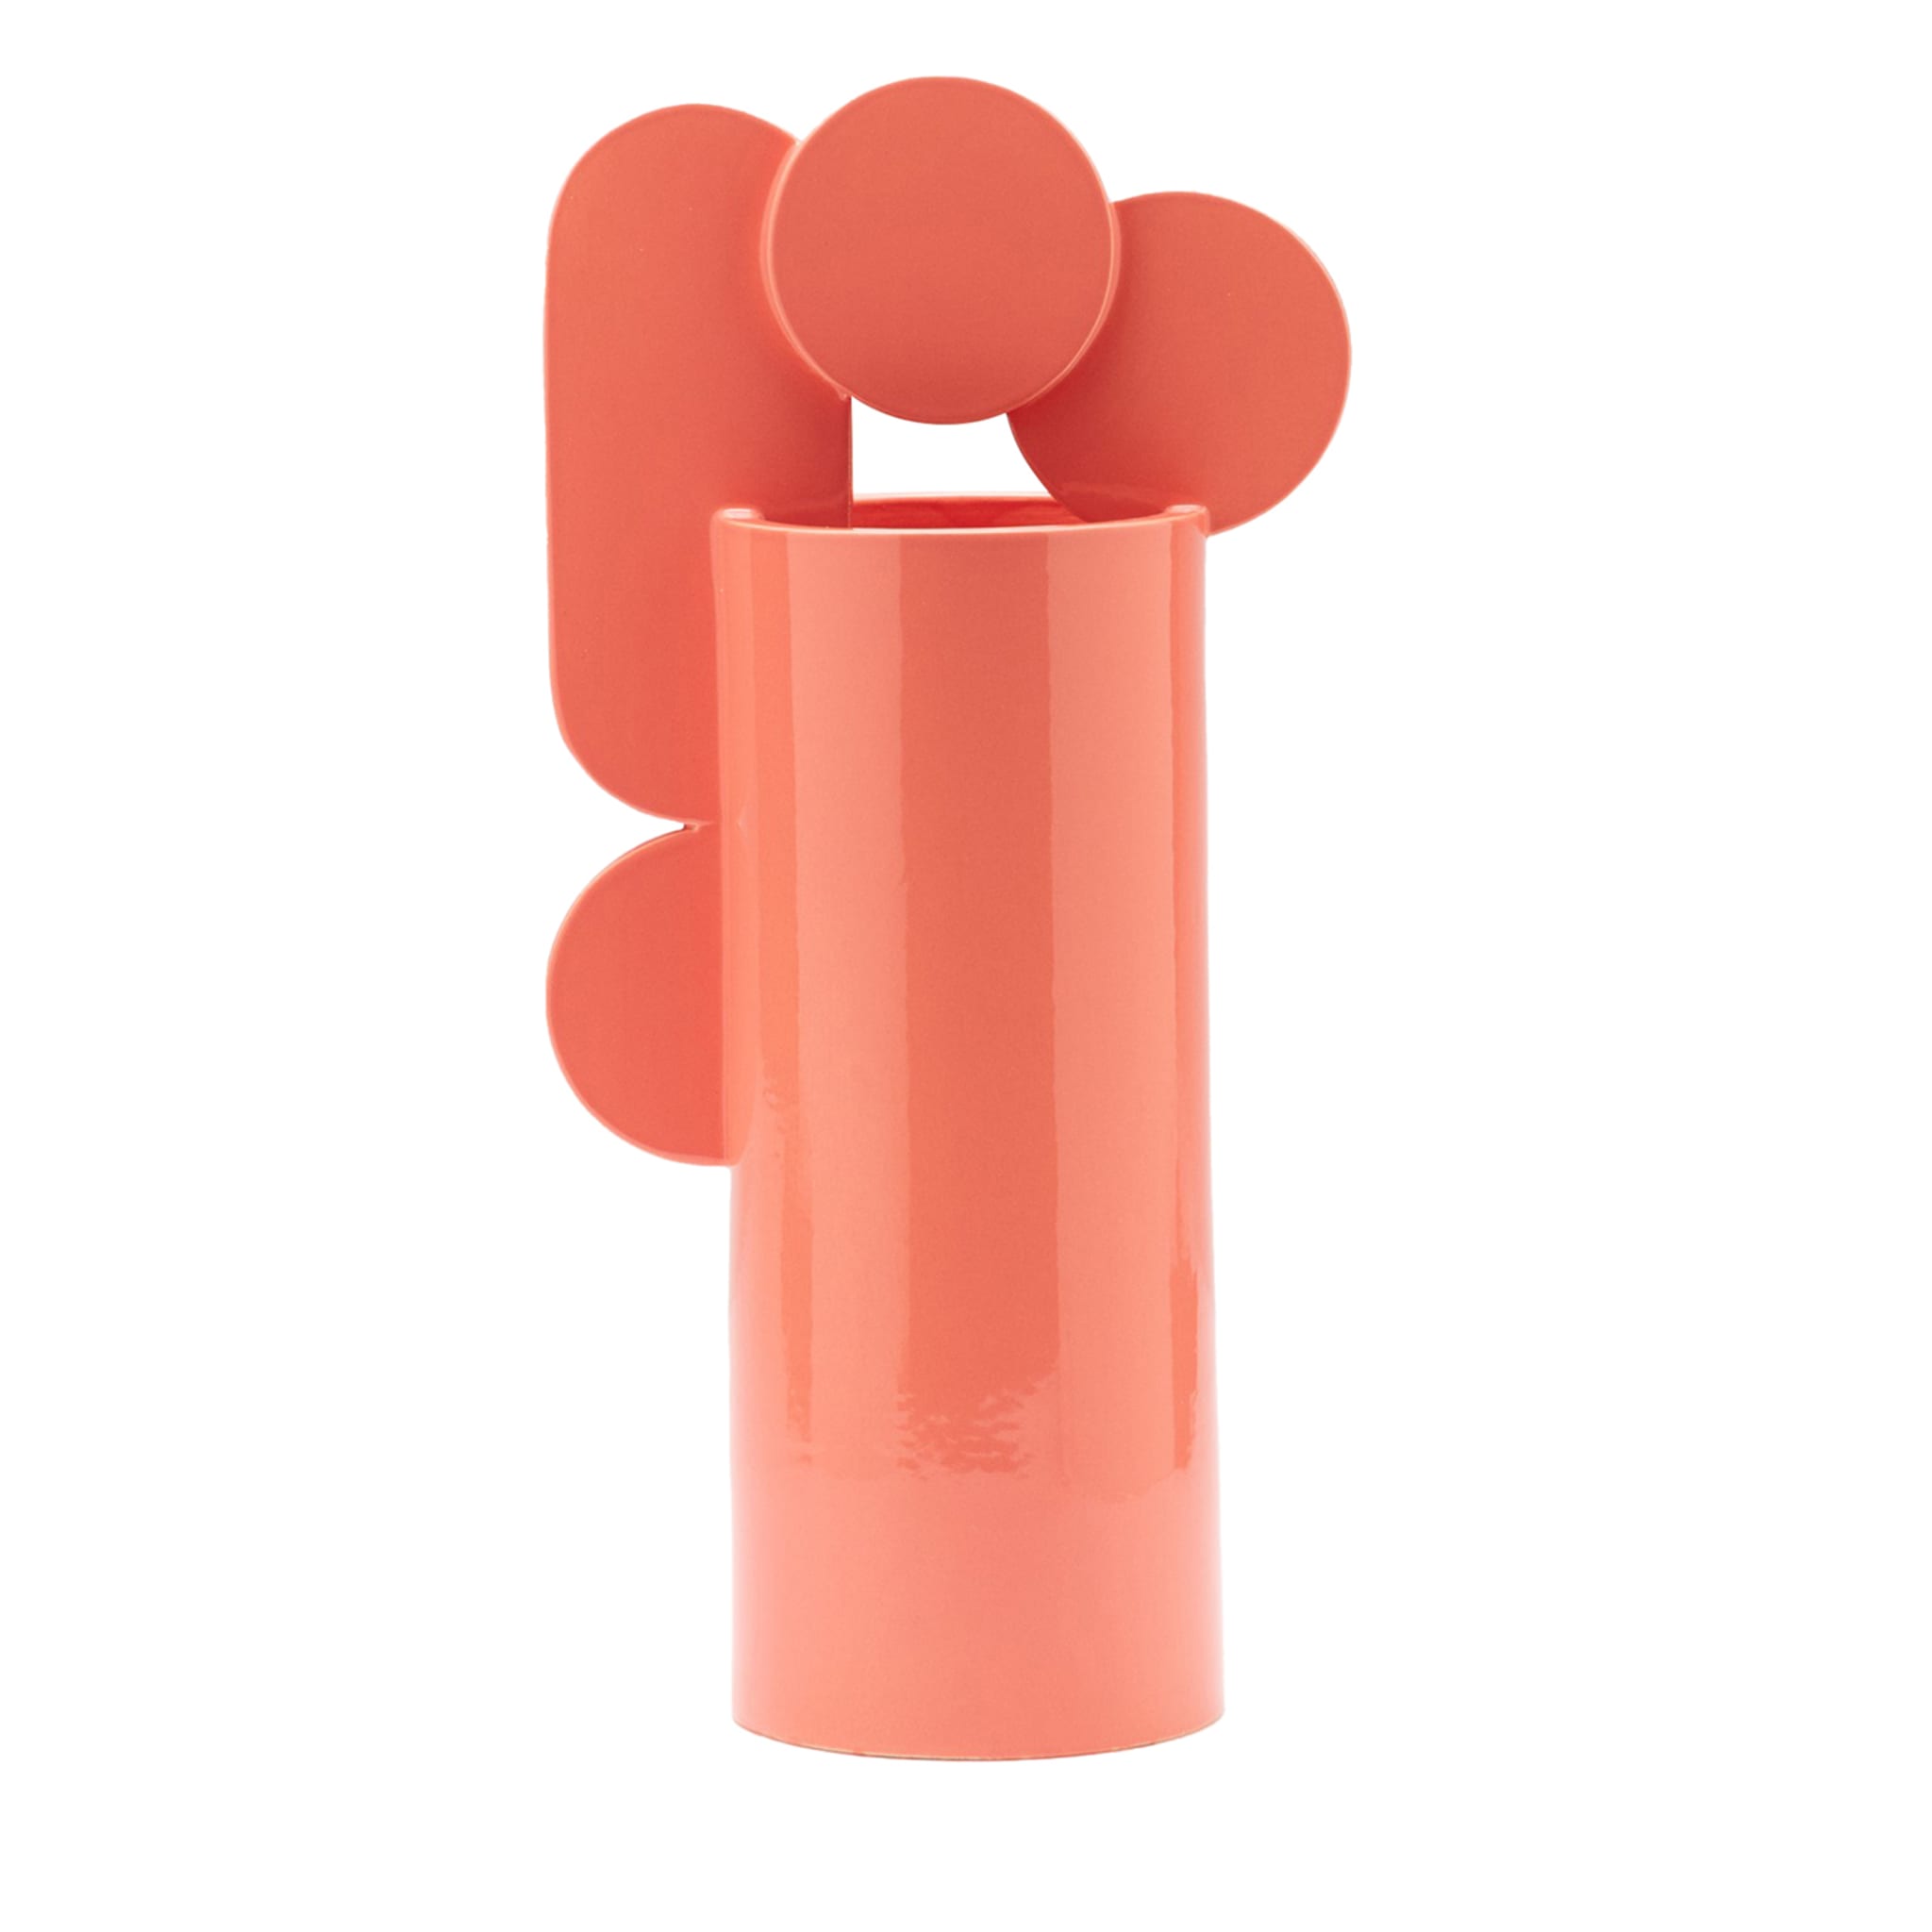 Bubble Family Candy Lovers Pastell-Orange Vase - Hauptansicht